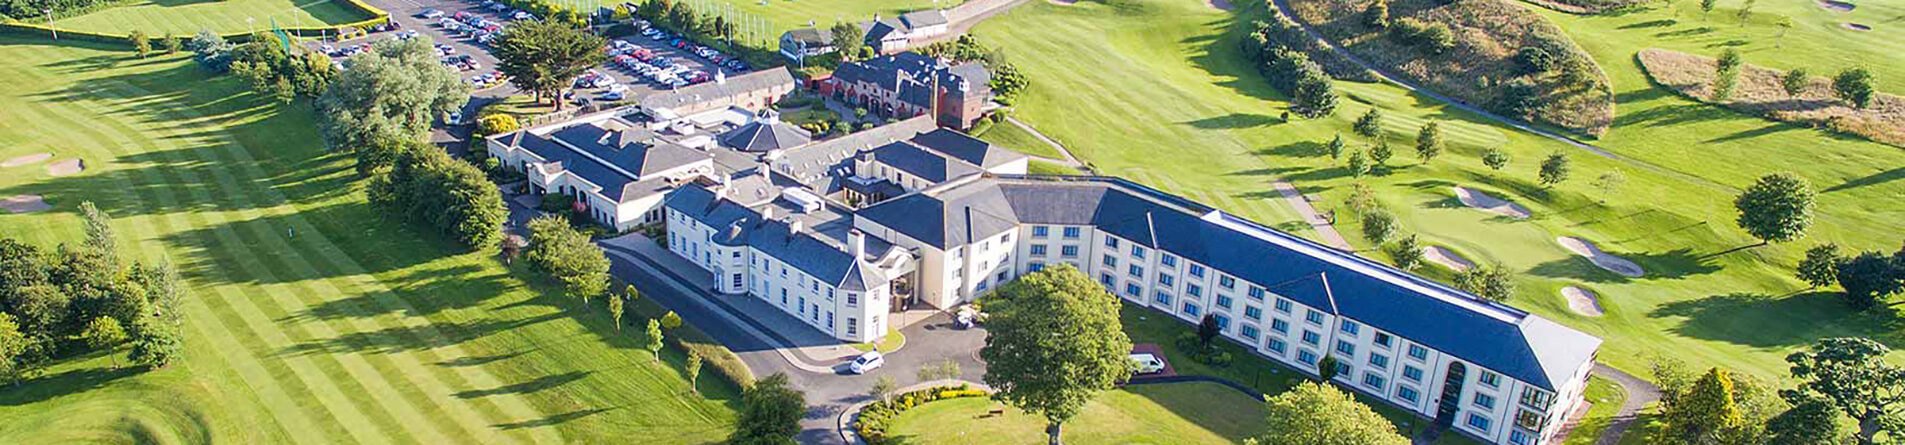 Roe Park Resort Hotel in Derry